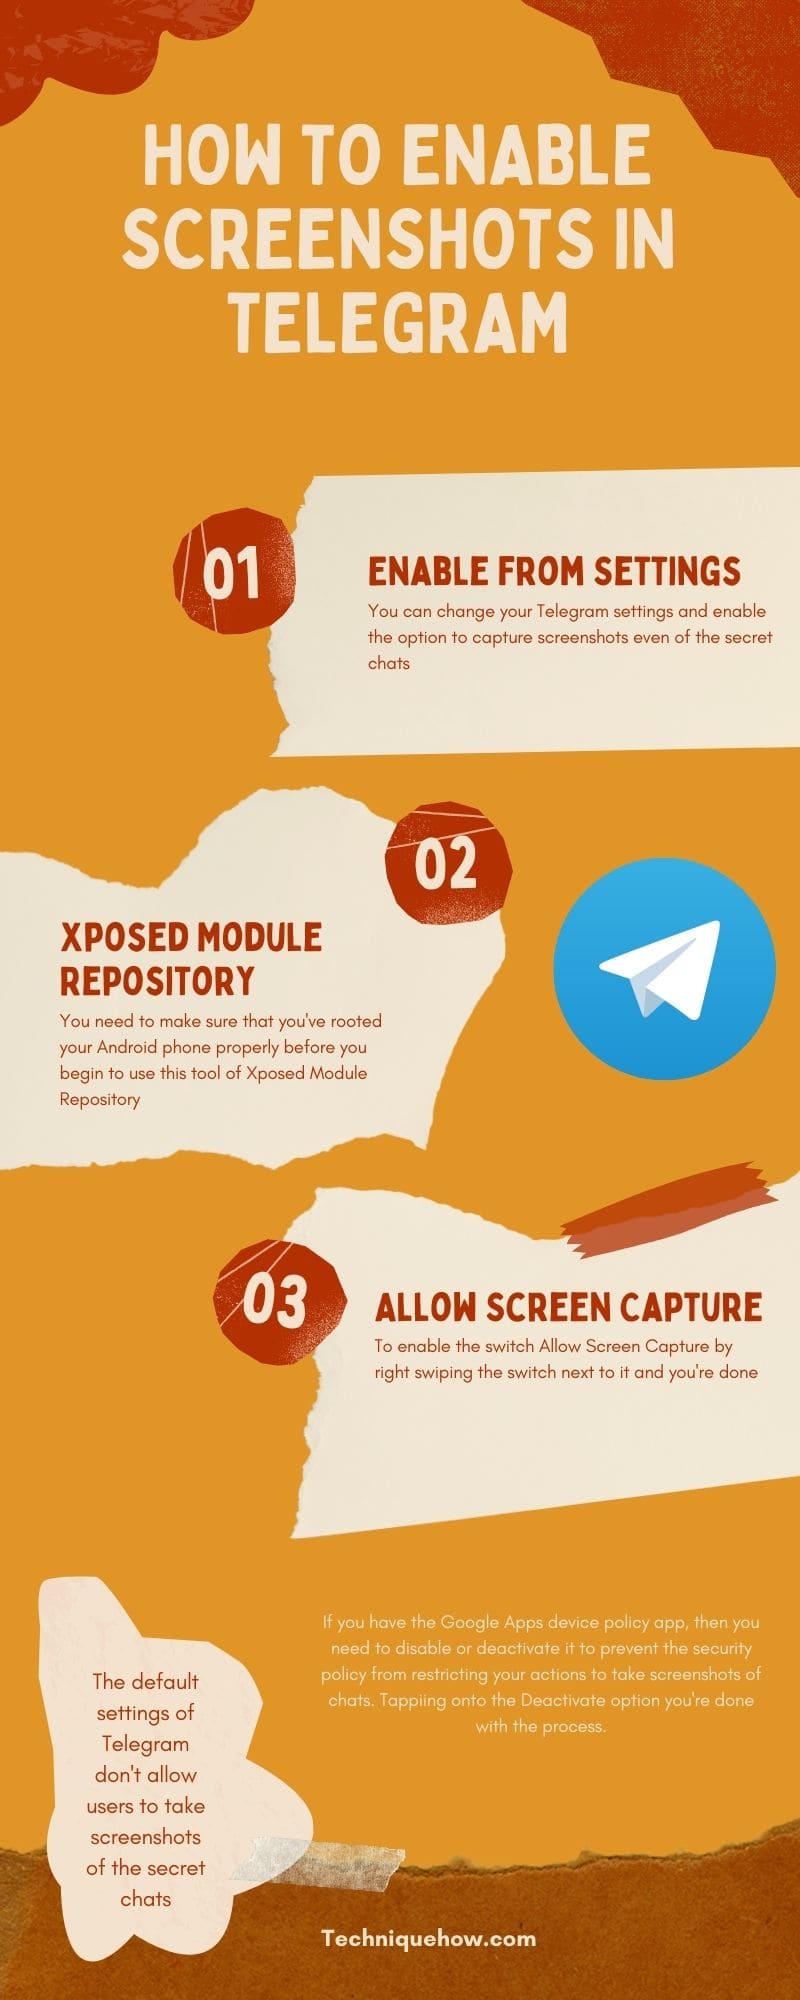 Infographic_take screenshots of telegram secret chats